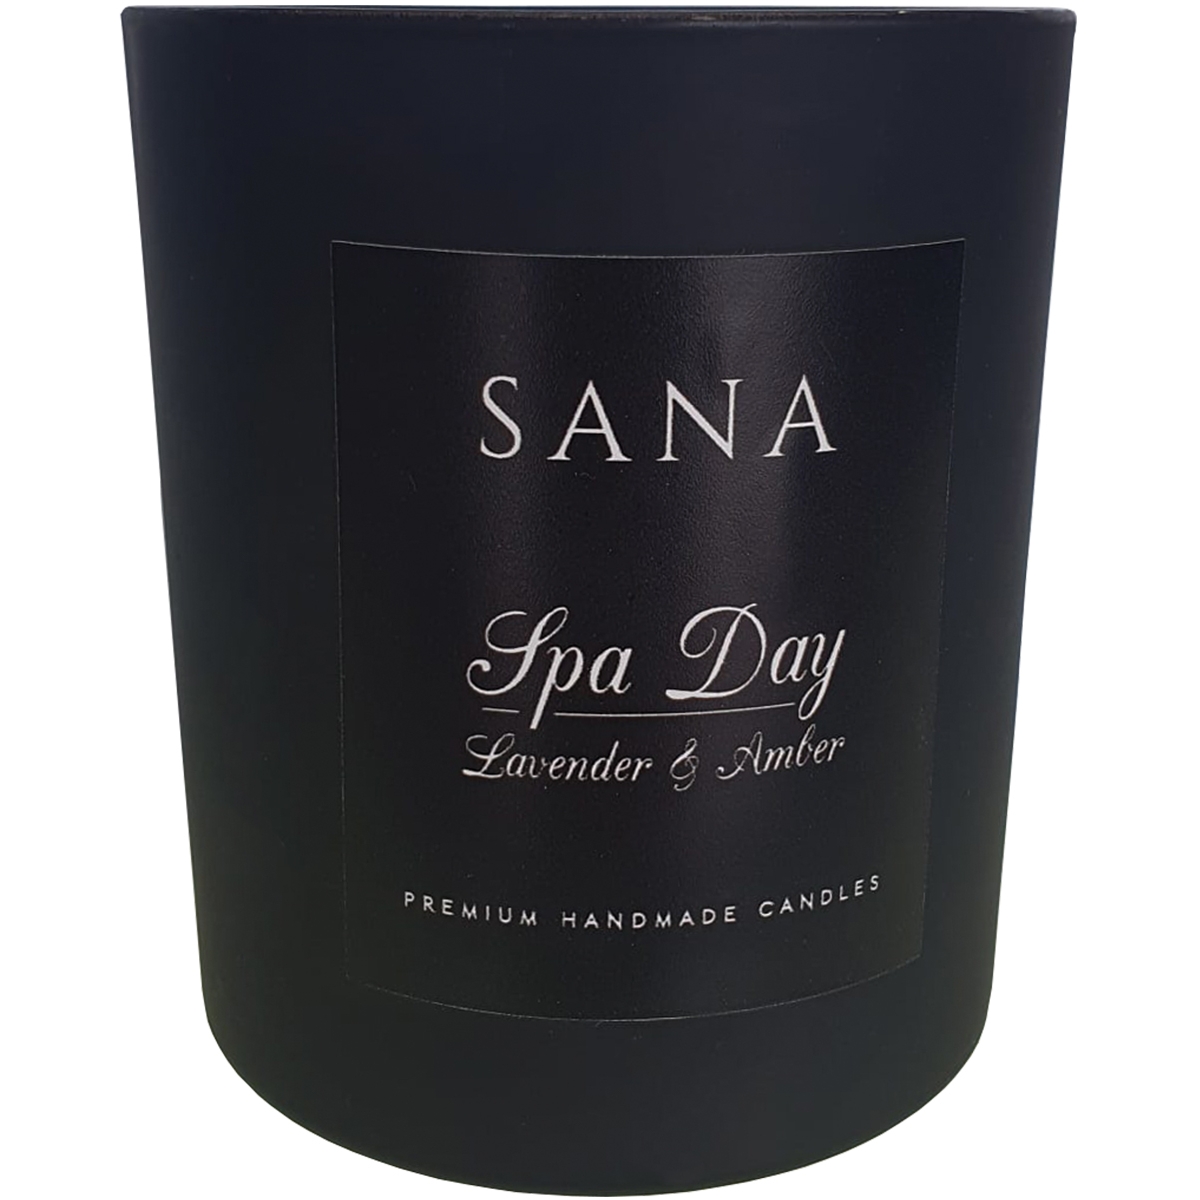 Spa Day Sana Perfumes, Home Fragrances, Arada Perfumes